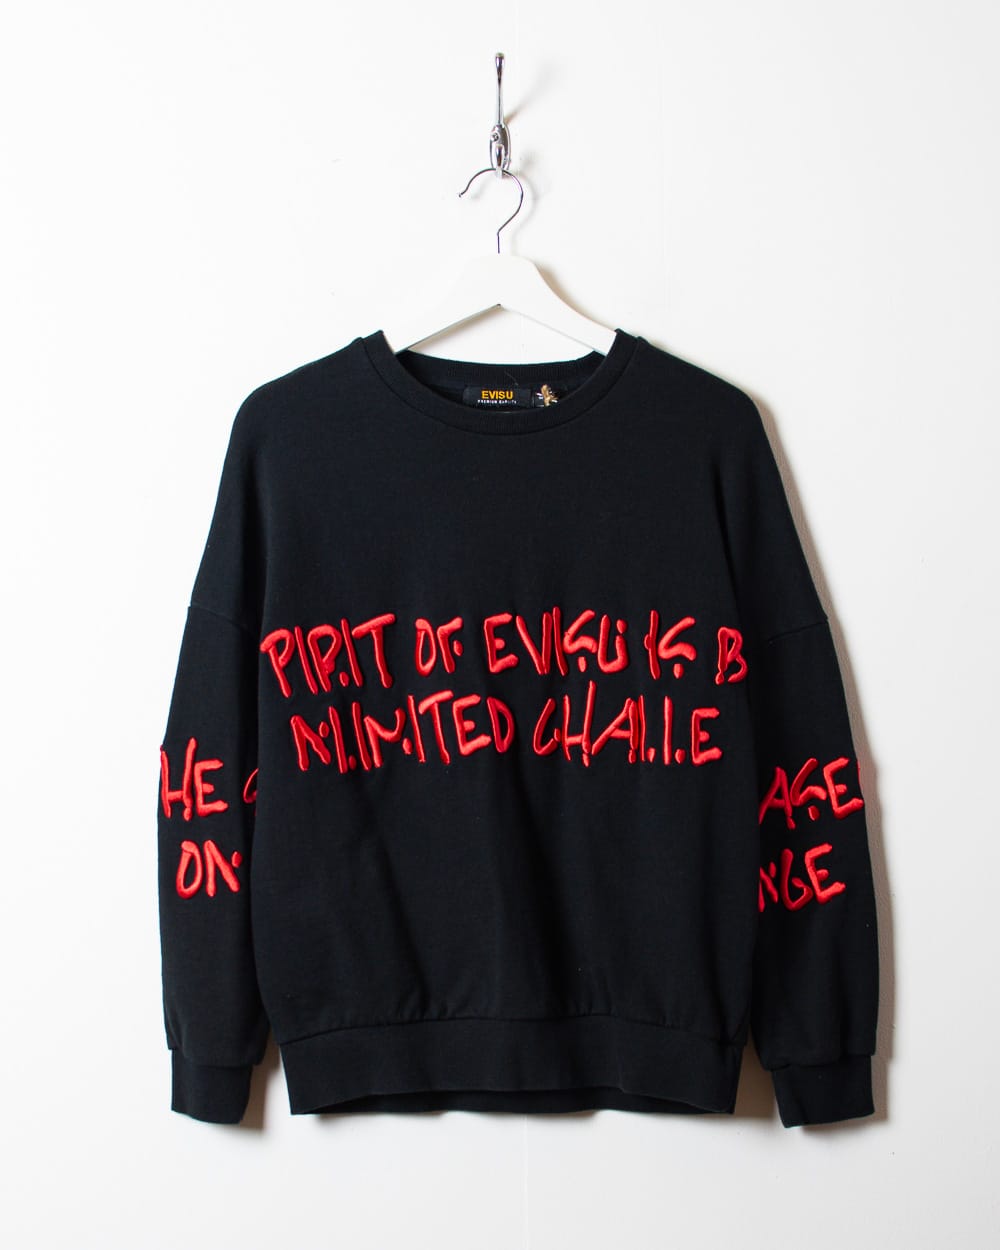 Black Evisu Embossed Sweatshirt - X-Small